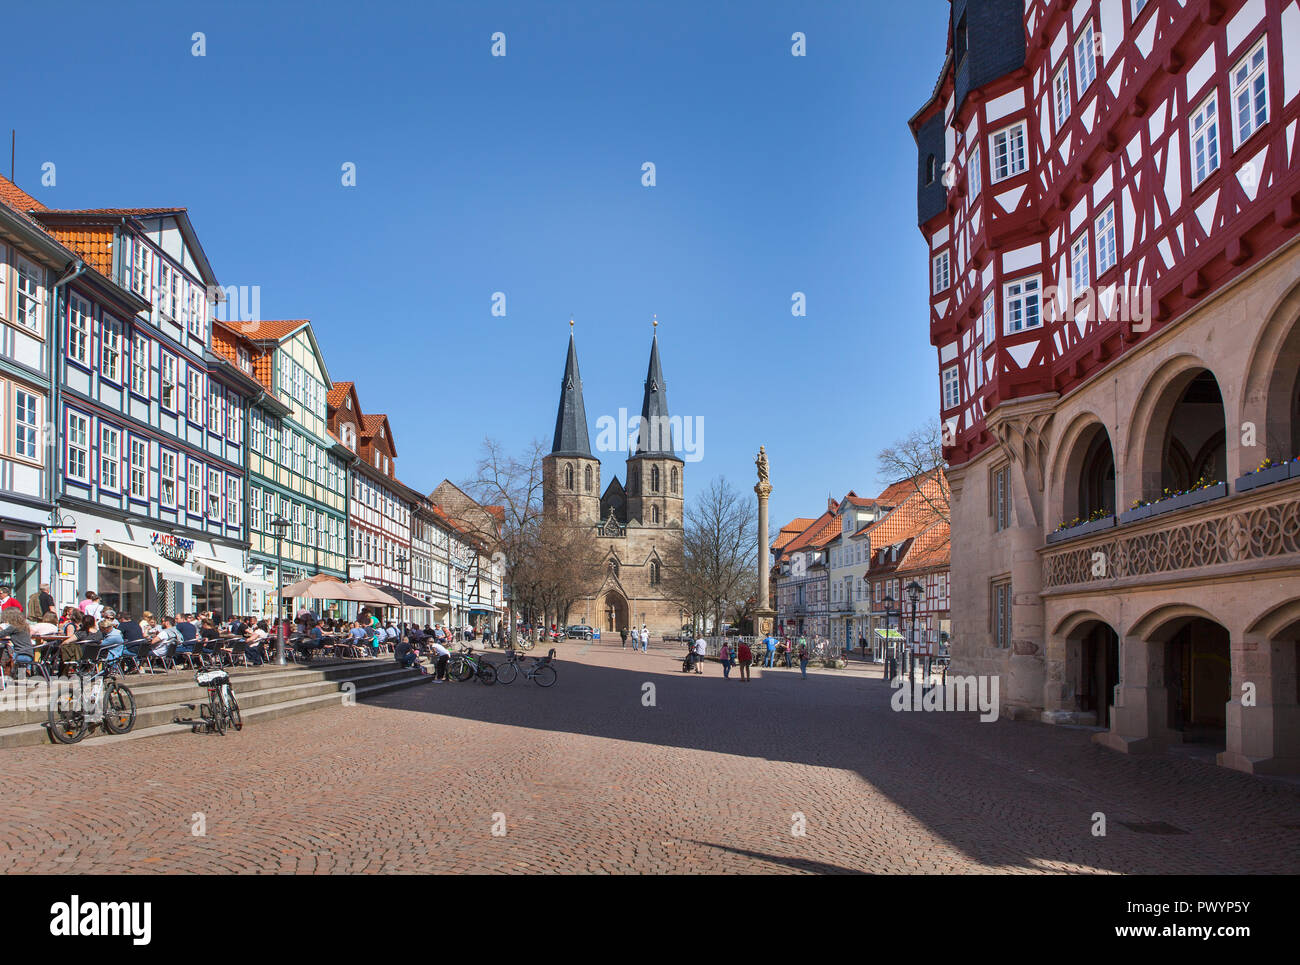 Hôtel de ville, rue Market, Duderstadt, Basse-Saxe, Allemagne, Europe Banque D'Images